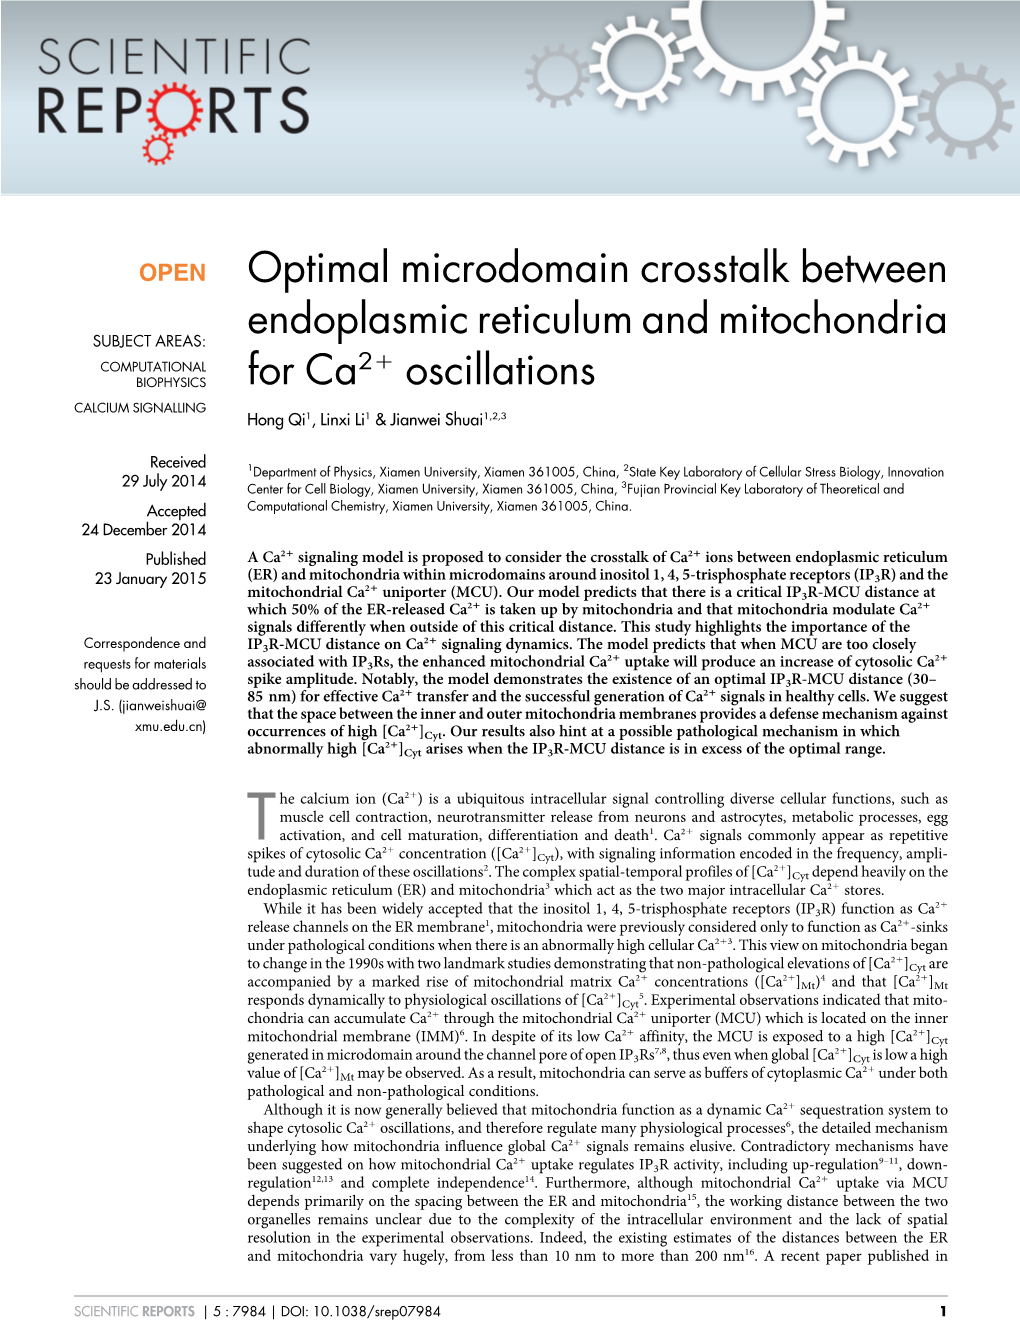 Optimal Microdomain Crosstalk Between Endoplasmic Reticulum